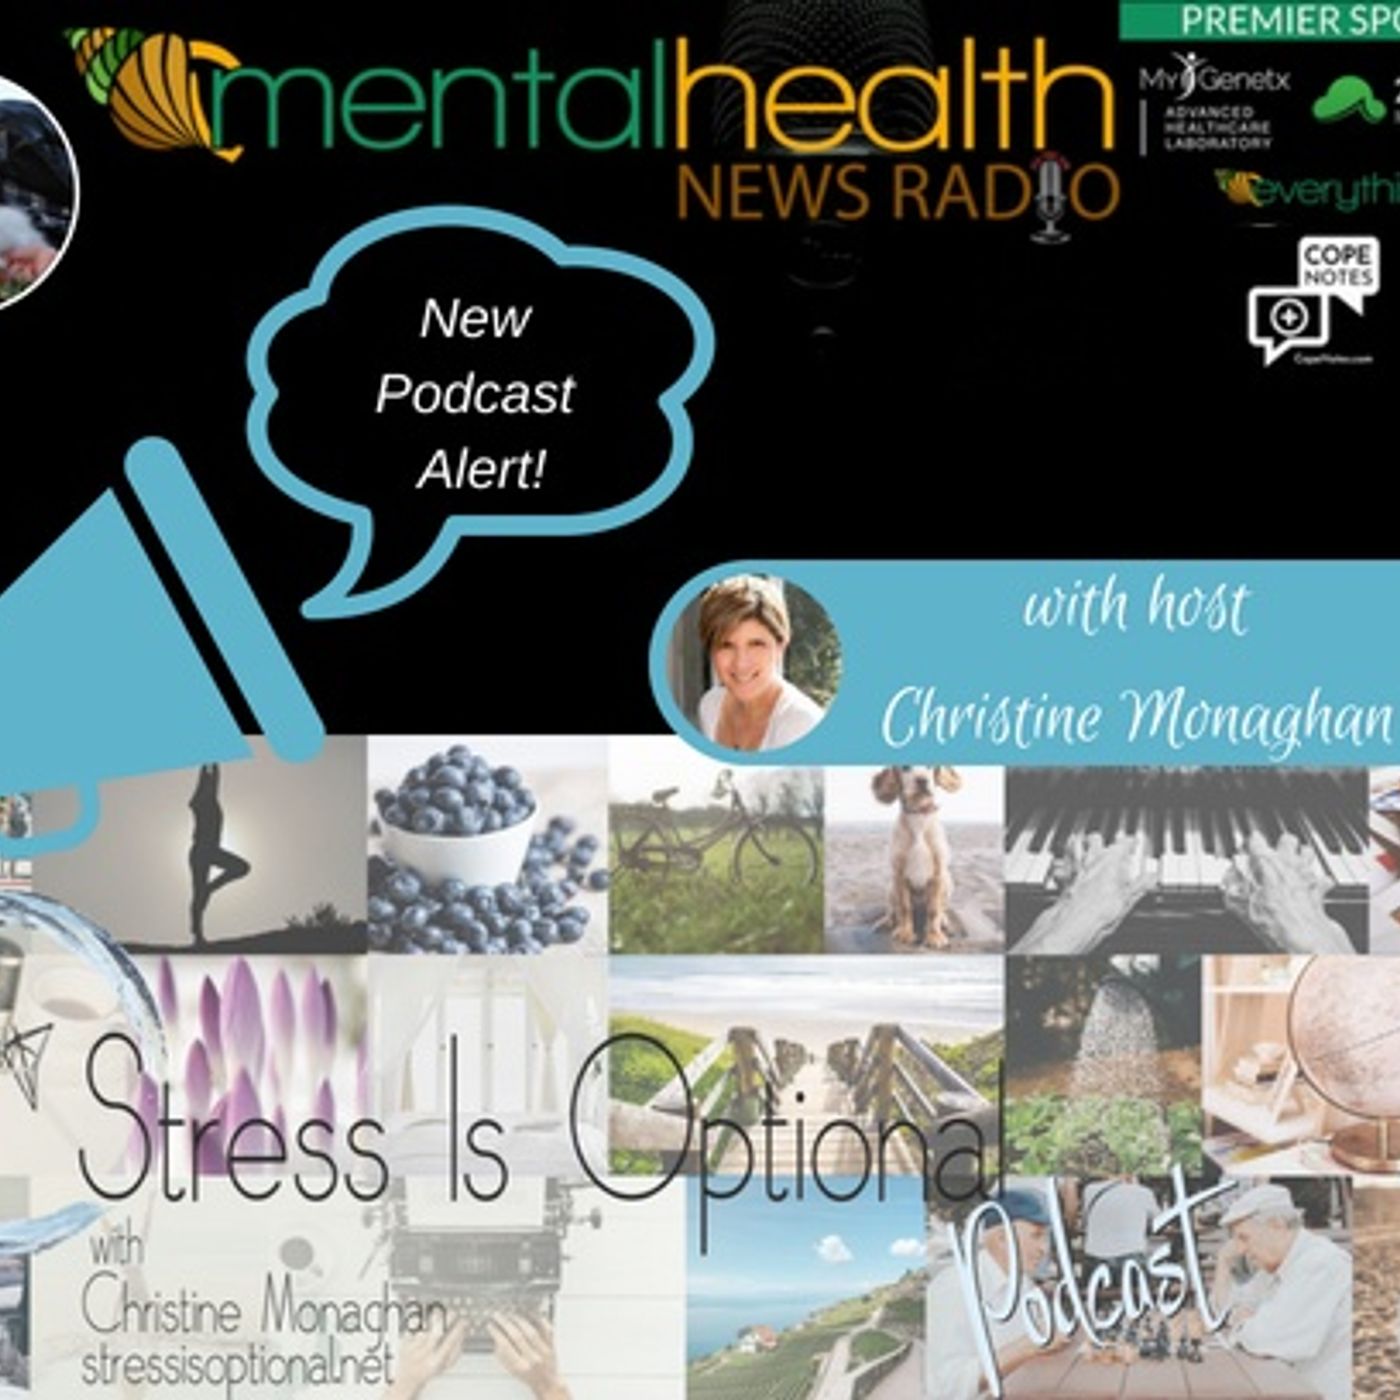 Mental Health News Radio - Stress Is Optional with Christine Monaghan